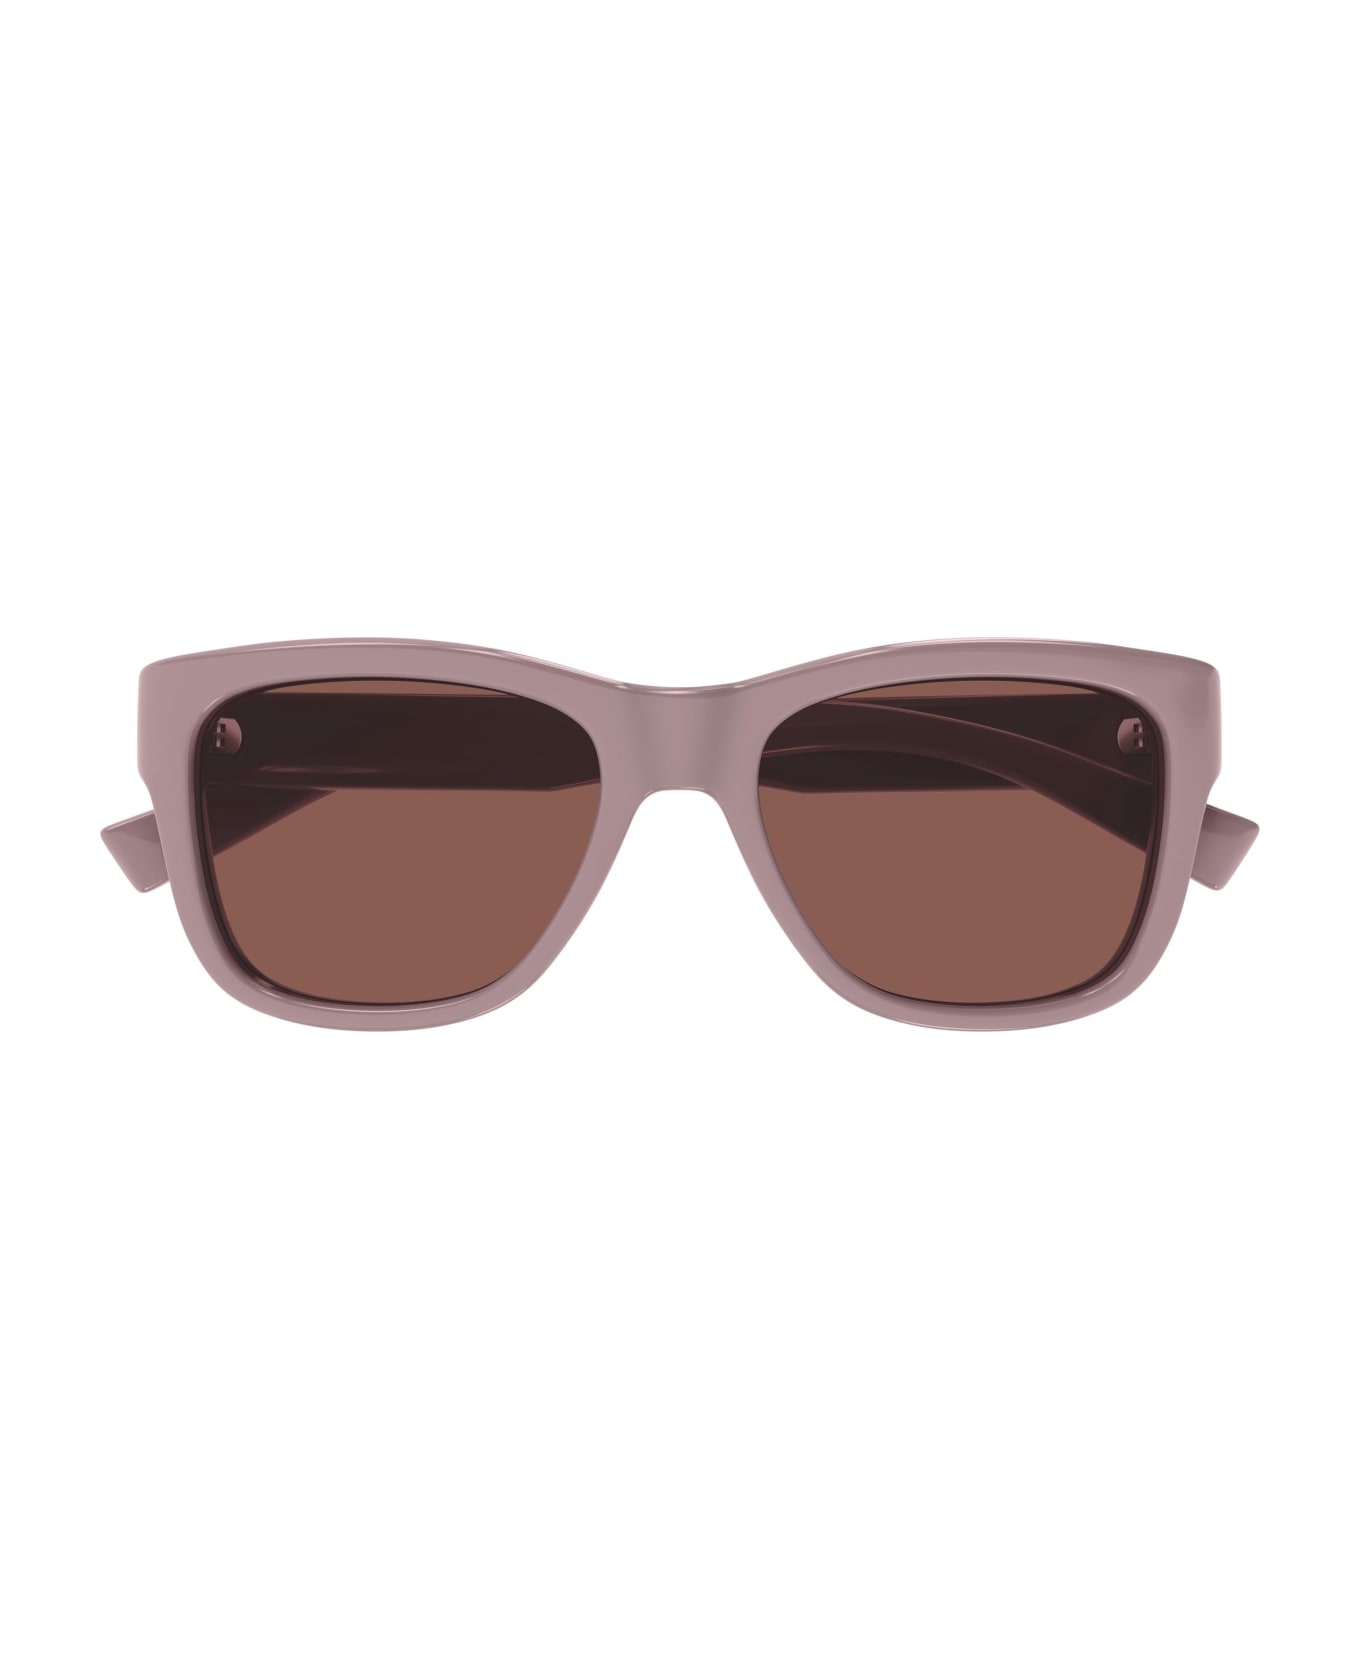 Saint Laurent Eyewear Sunglasses - Rosa/Marrone